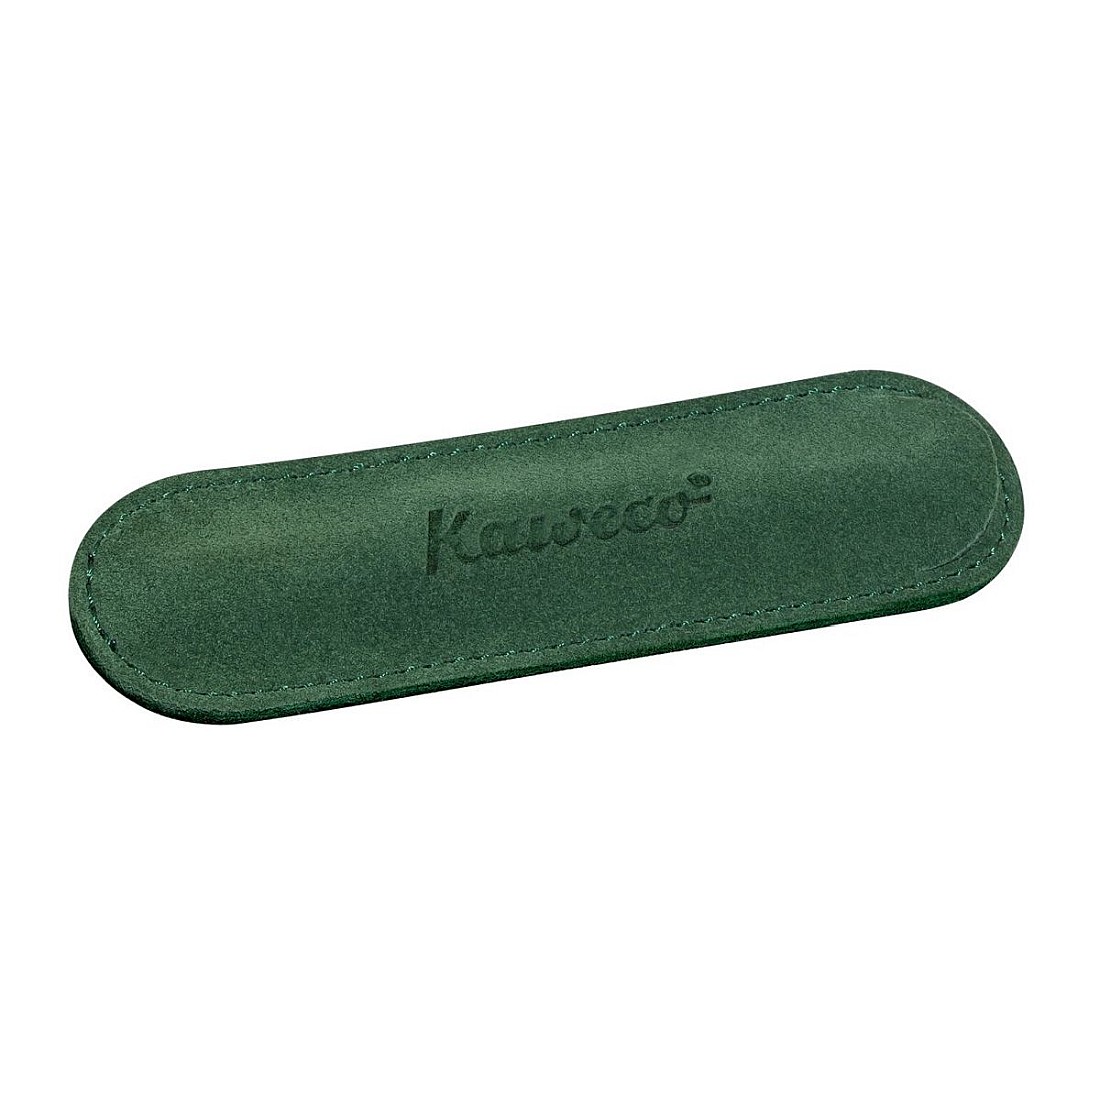 Kaweco Sport Eco Green Velour Pen Pouch 1 Pen